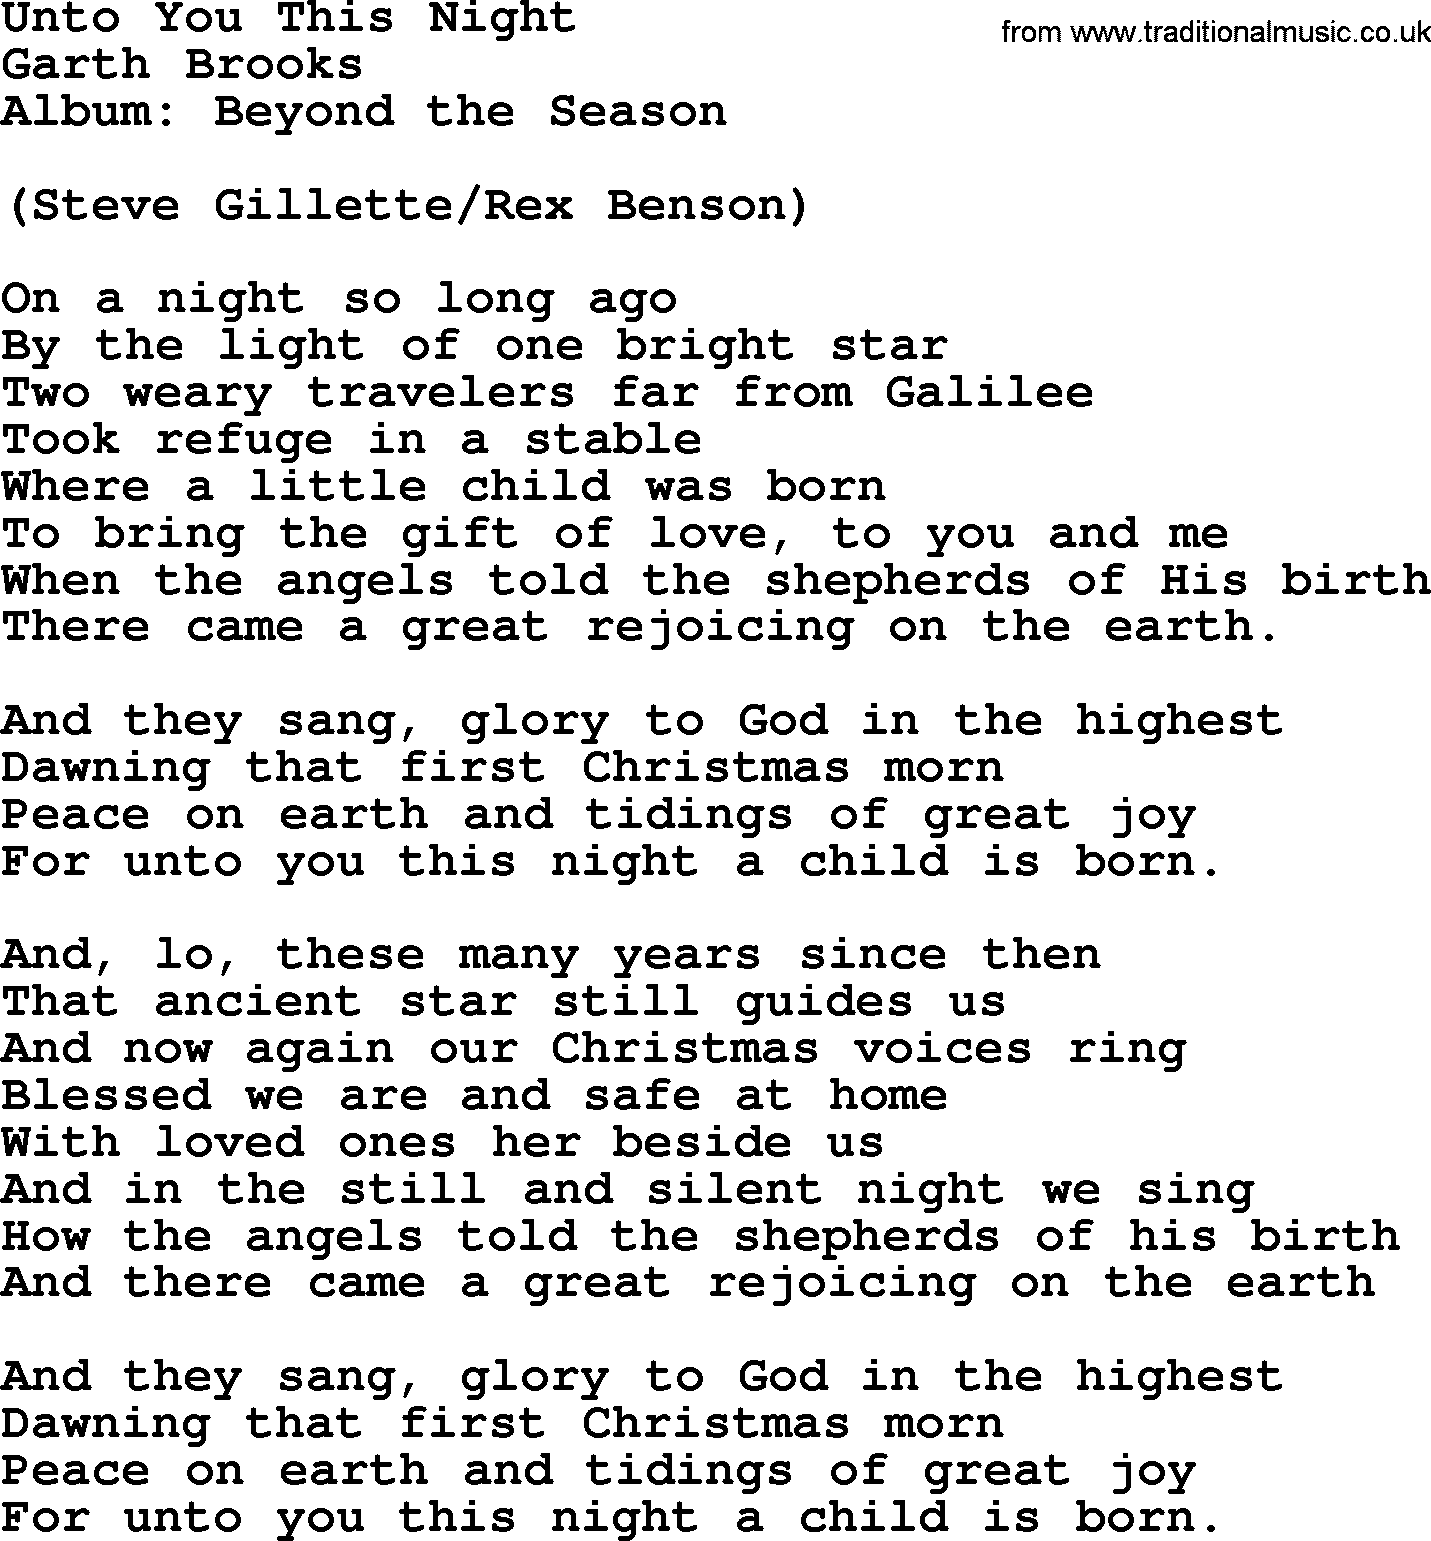 Garth Brooks song: Unto You This Night, lyrics